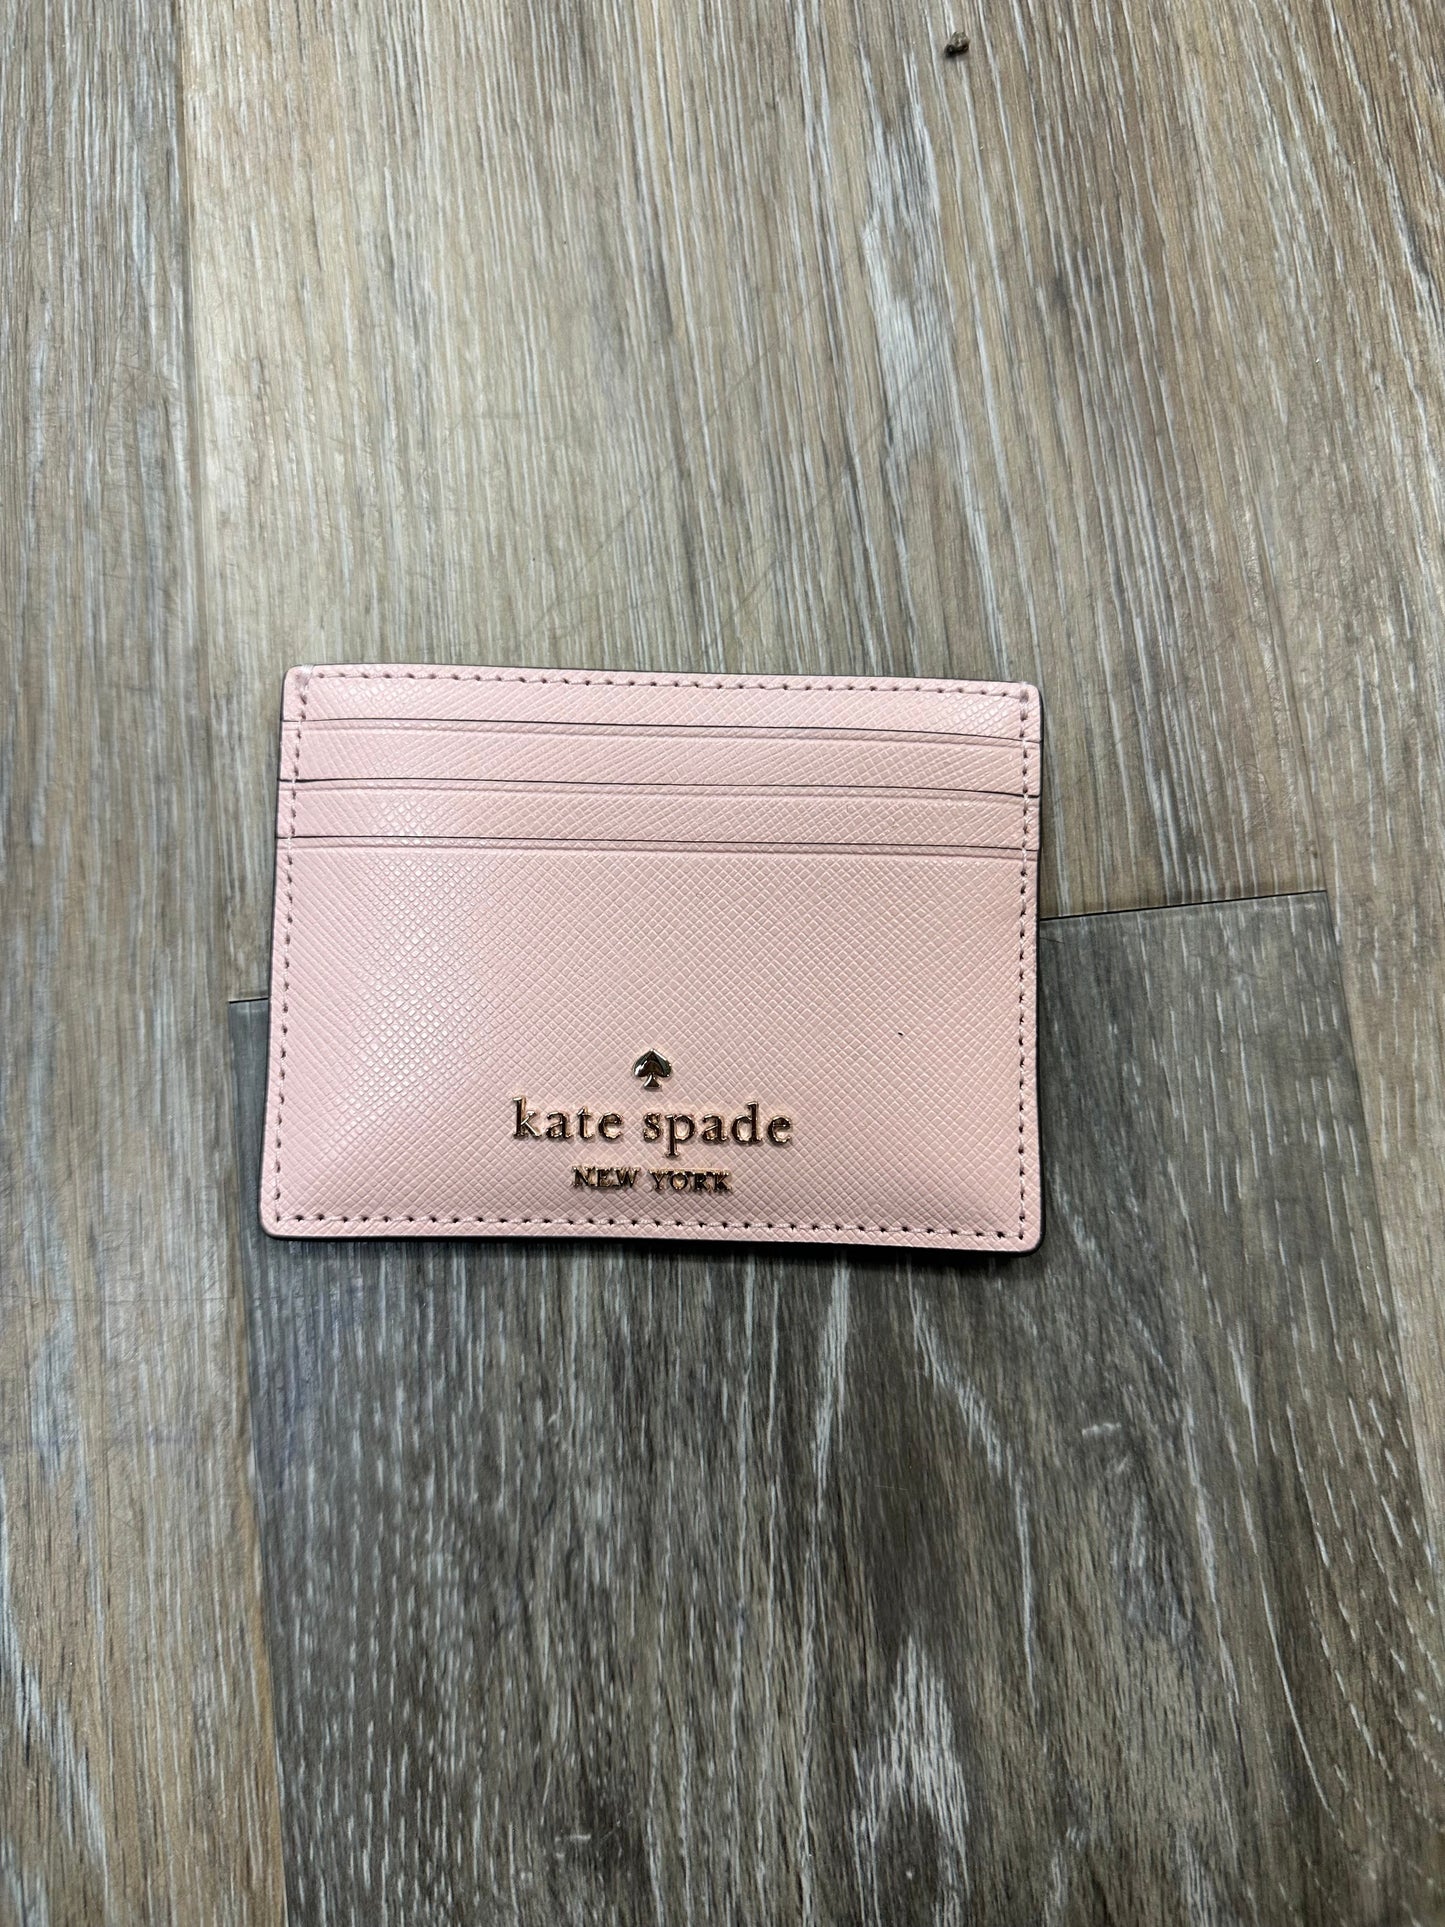 Wallet Designer Kate Spade, Size Small